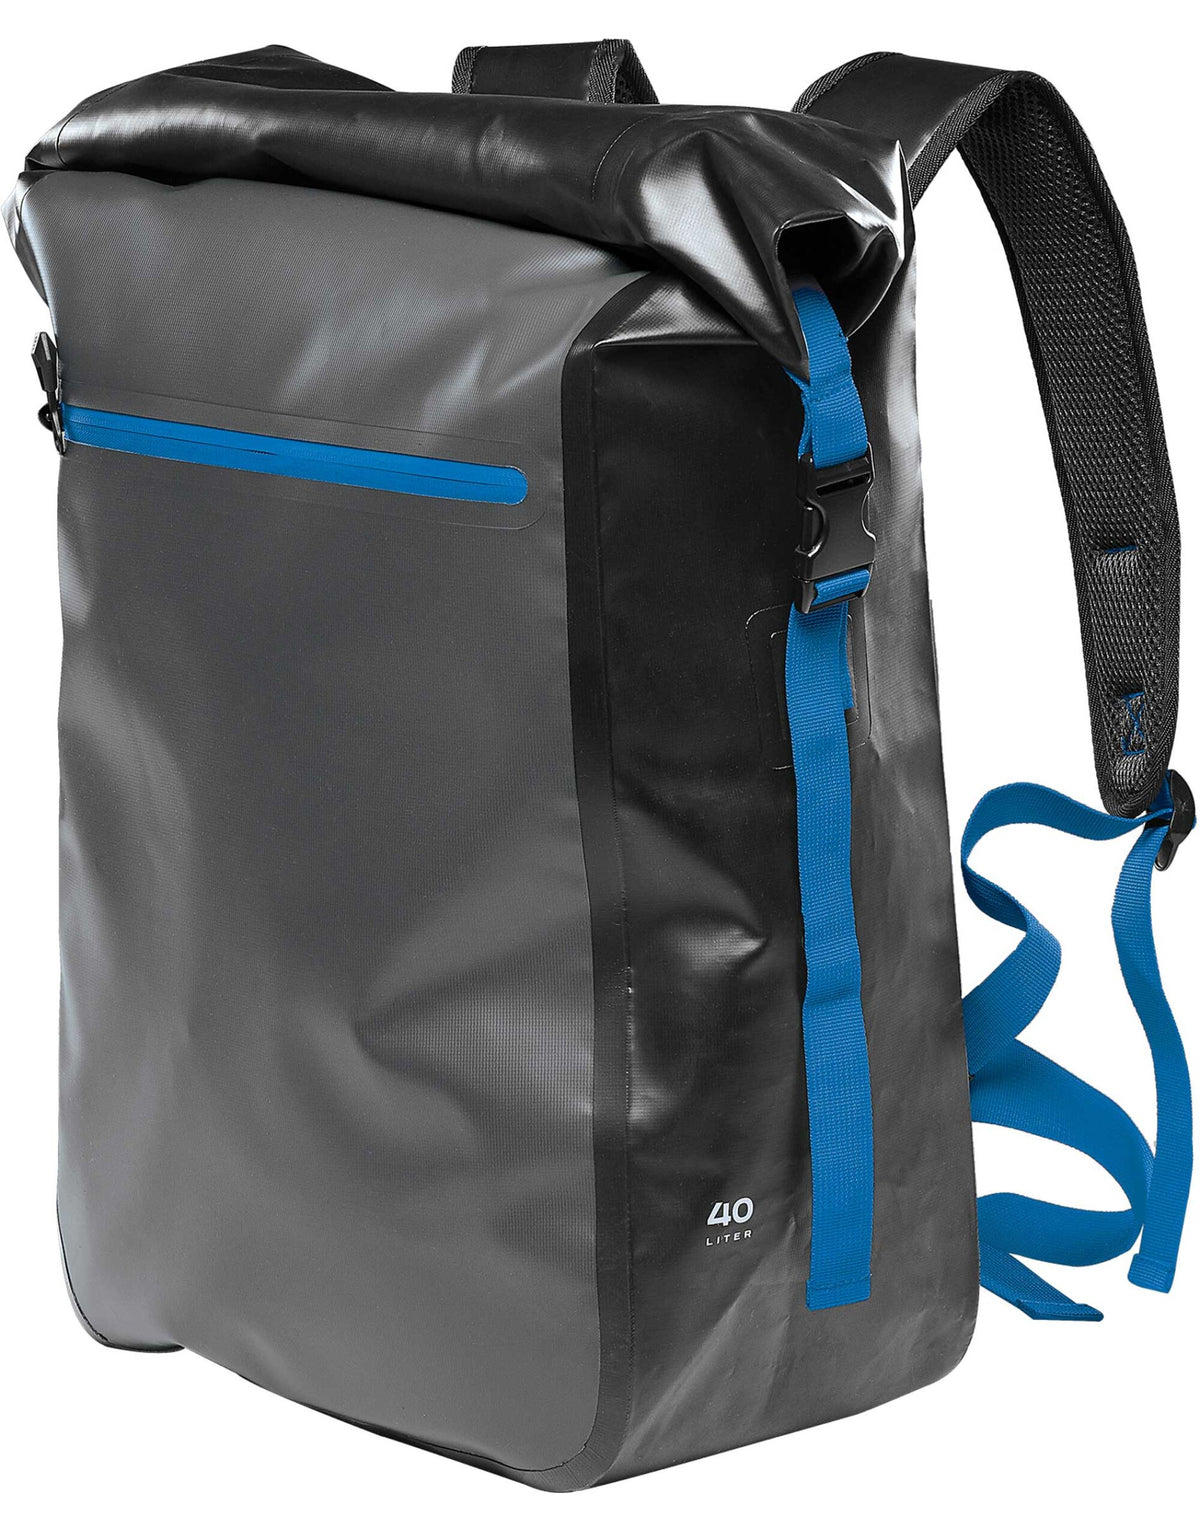 Stormtech Kemano Backpack